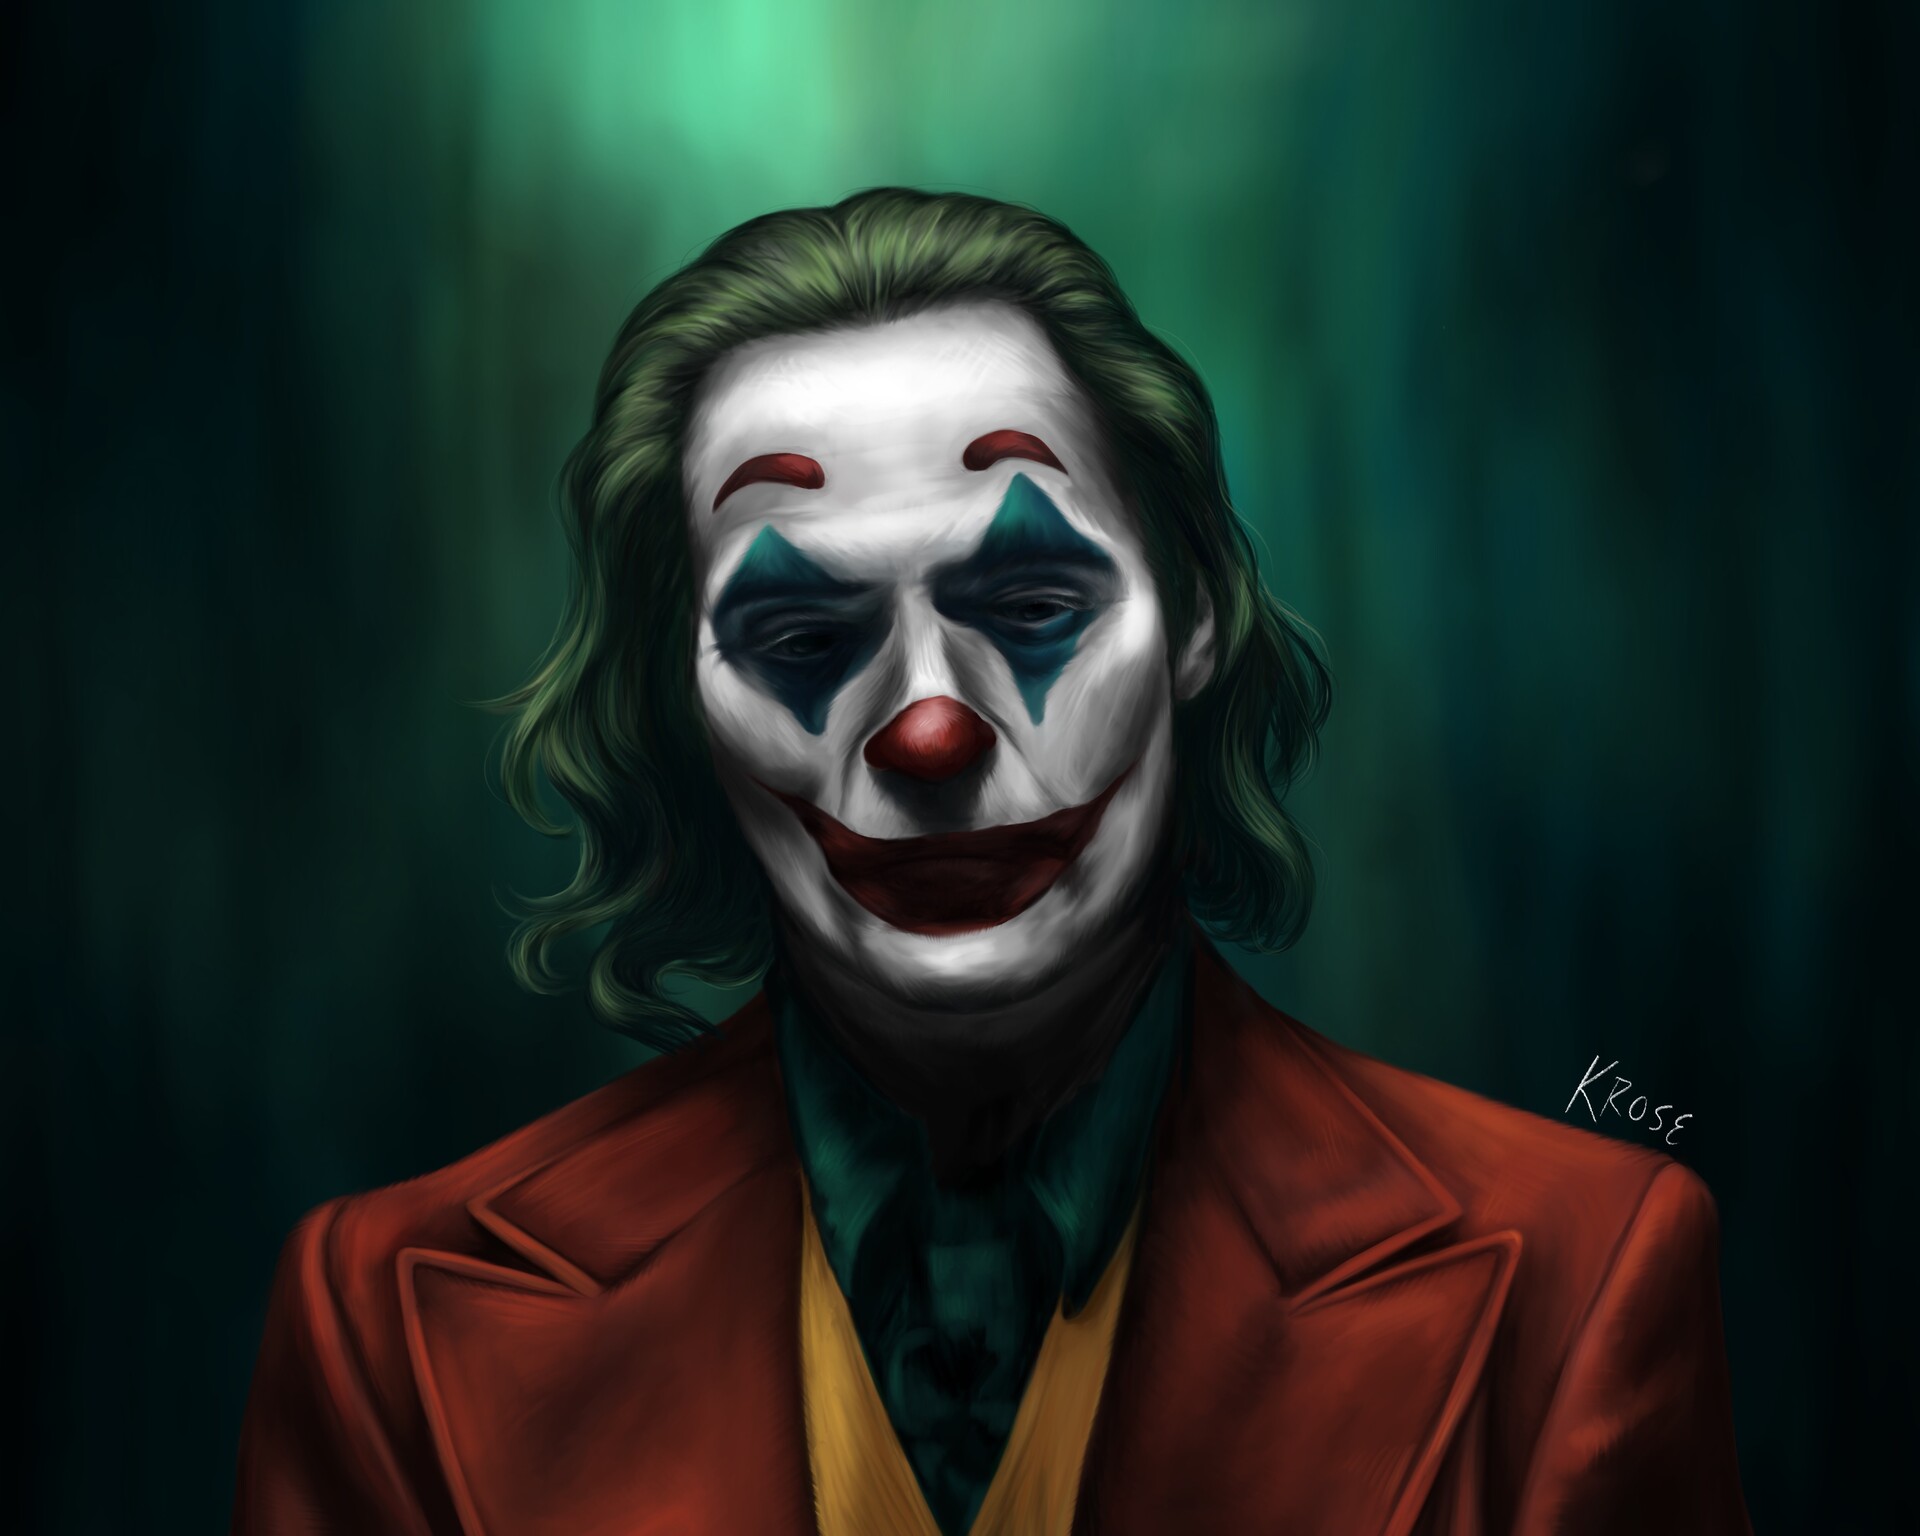 ArtStation - Joker Painting - 2019